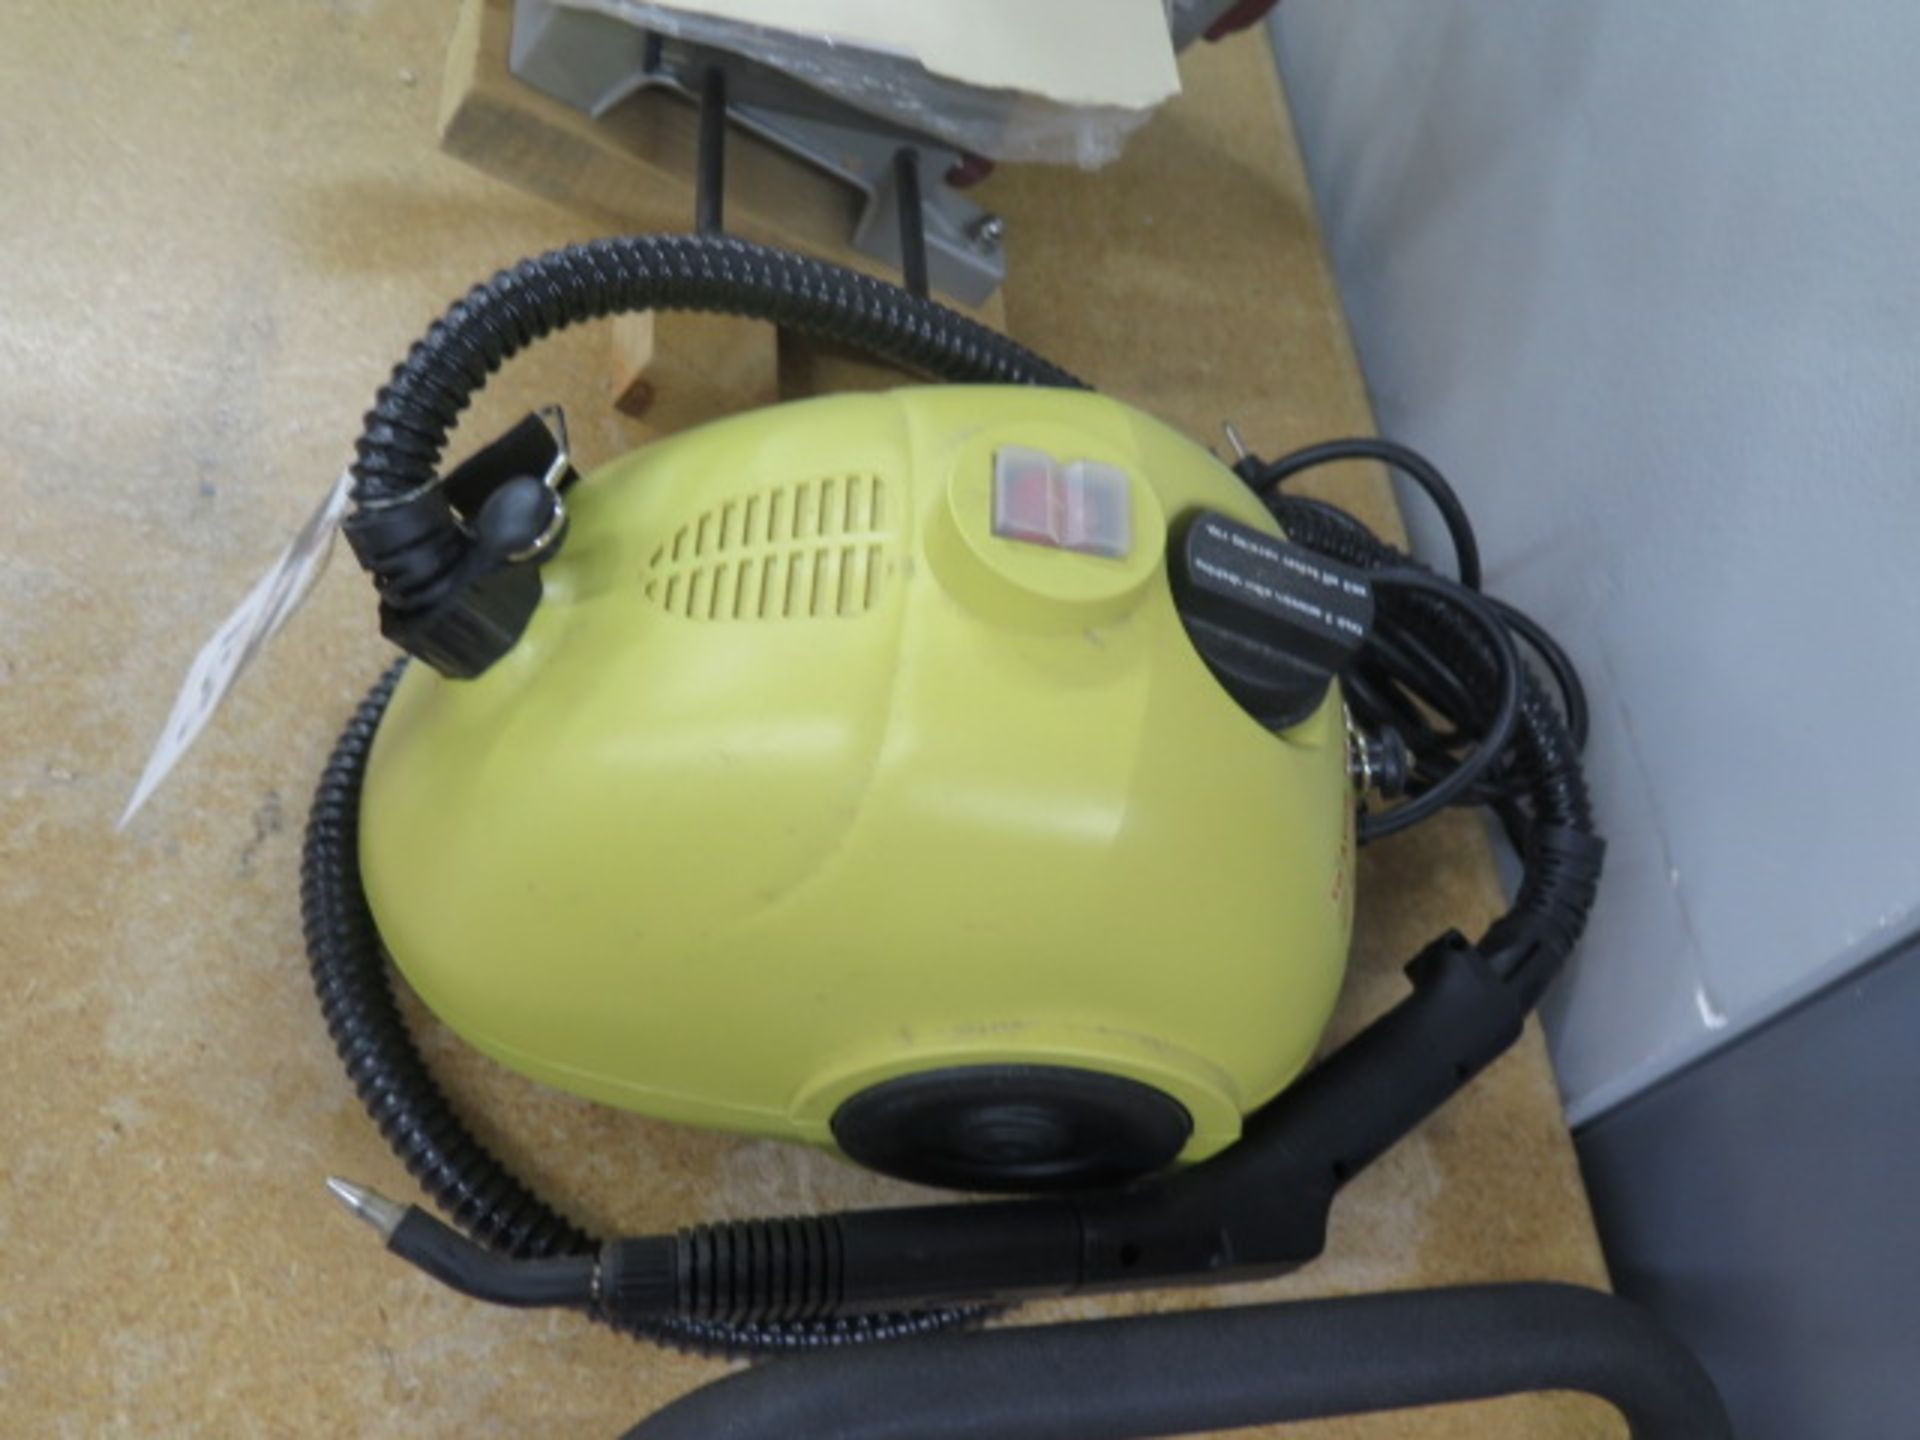 Import mdl. EK-8005 Steam Cleaner (SOLD AS-IS - NO WARRANTY) - Image 2 of 3